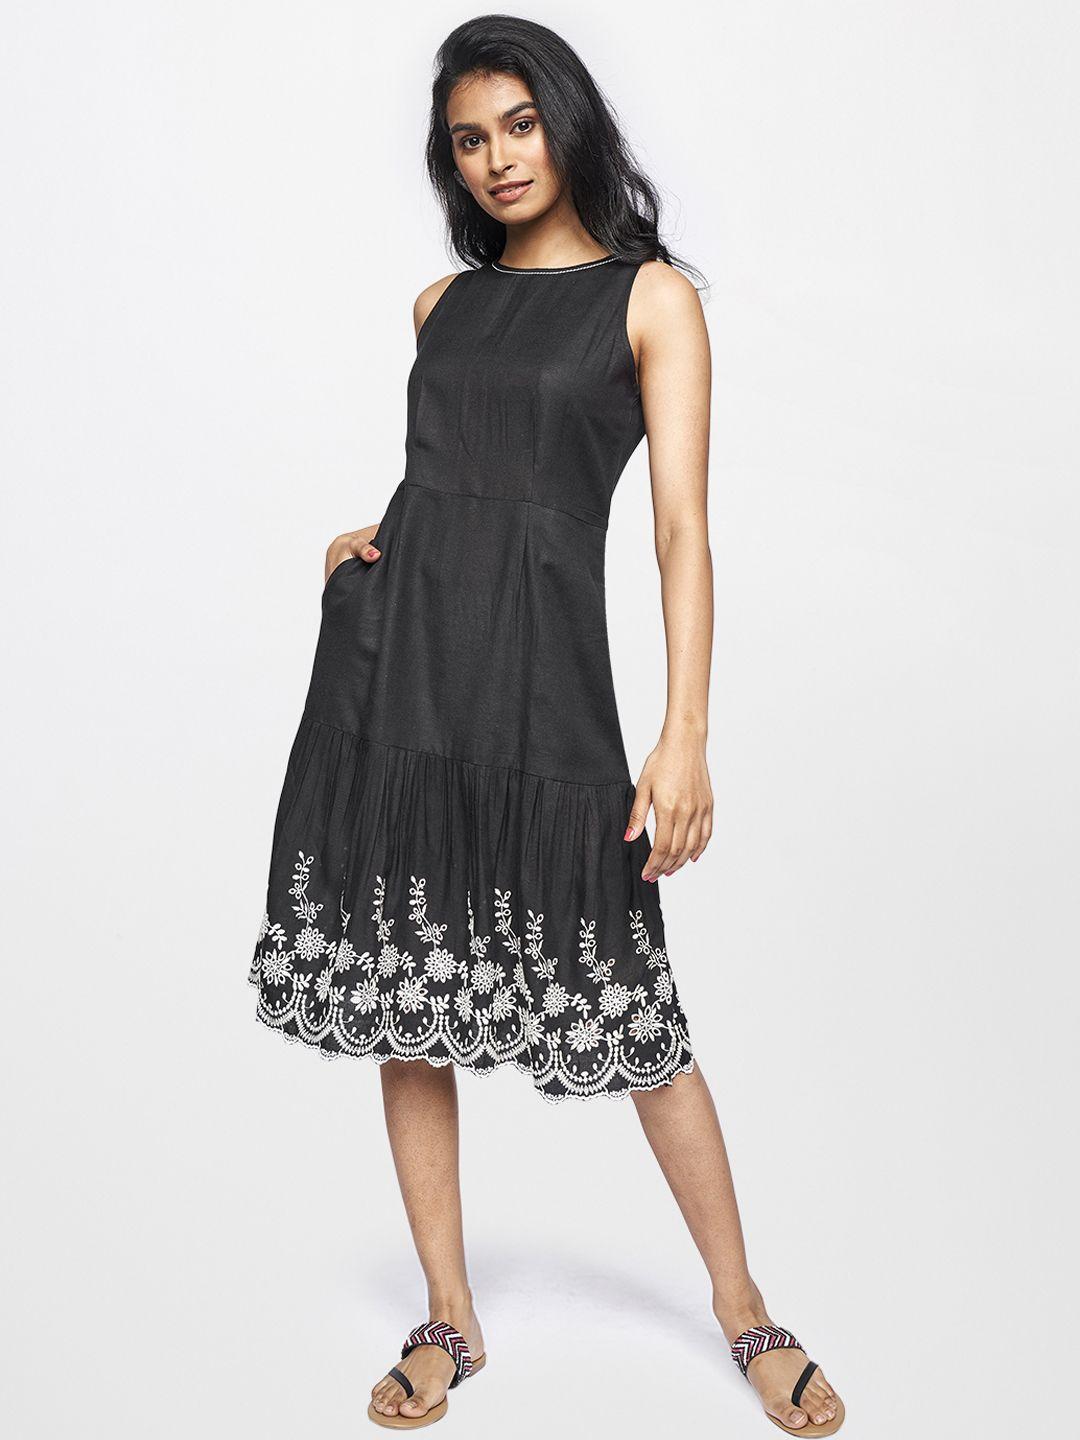 global desi black & white floral sleeveless a-line casual dress